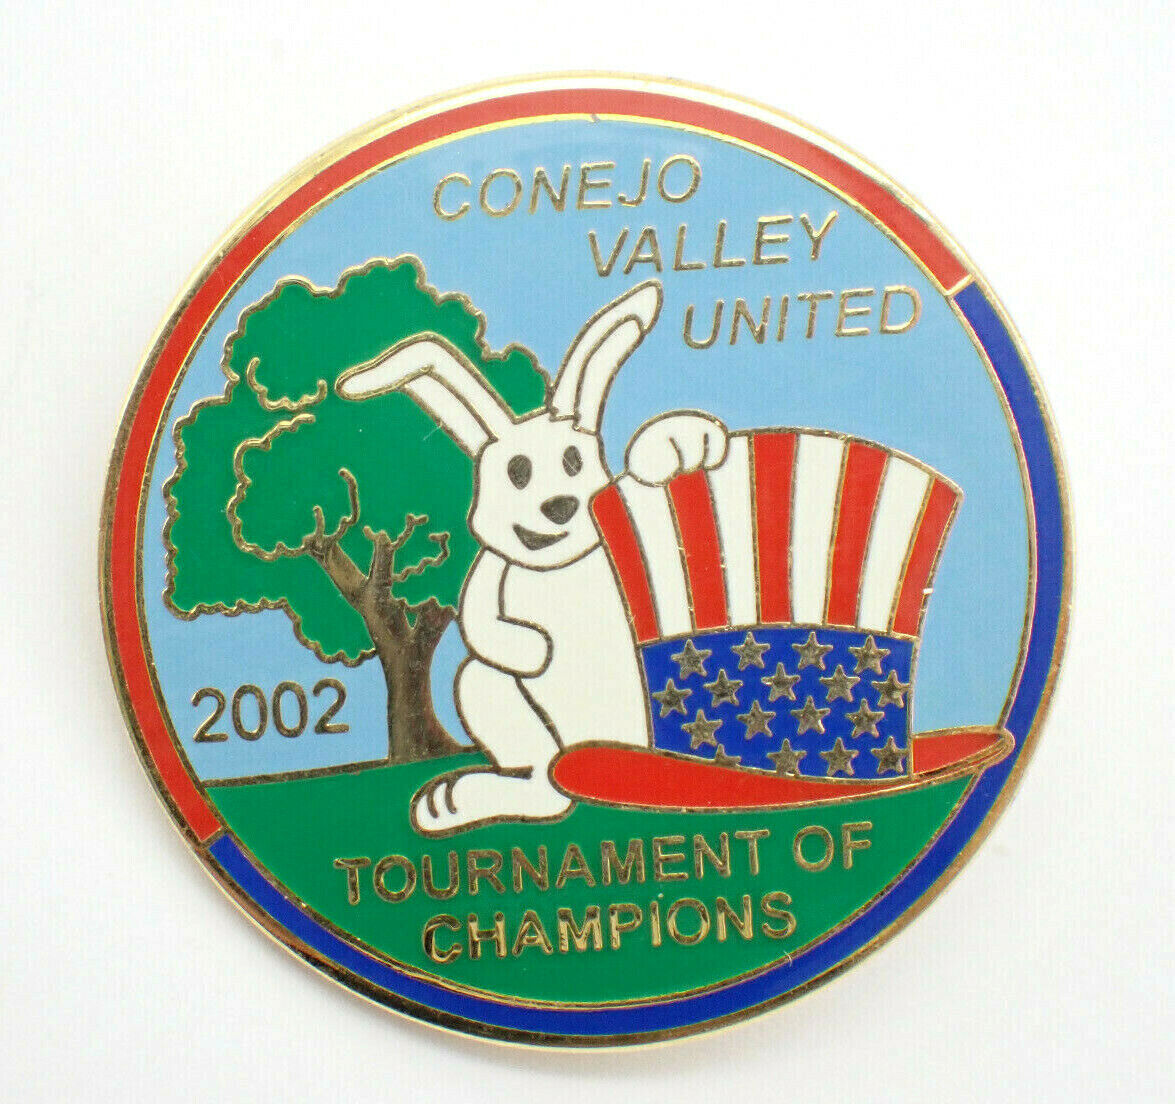 White Rabbit American Flag Hat Conejo Valley United Vintage Lapel Pin